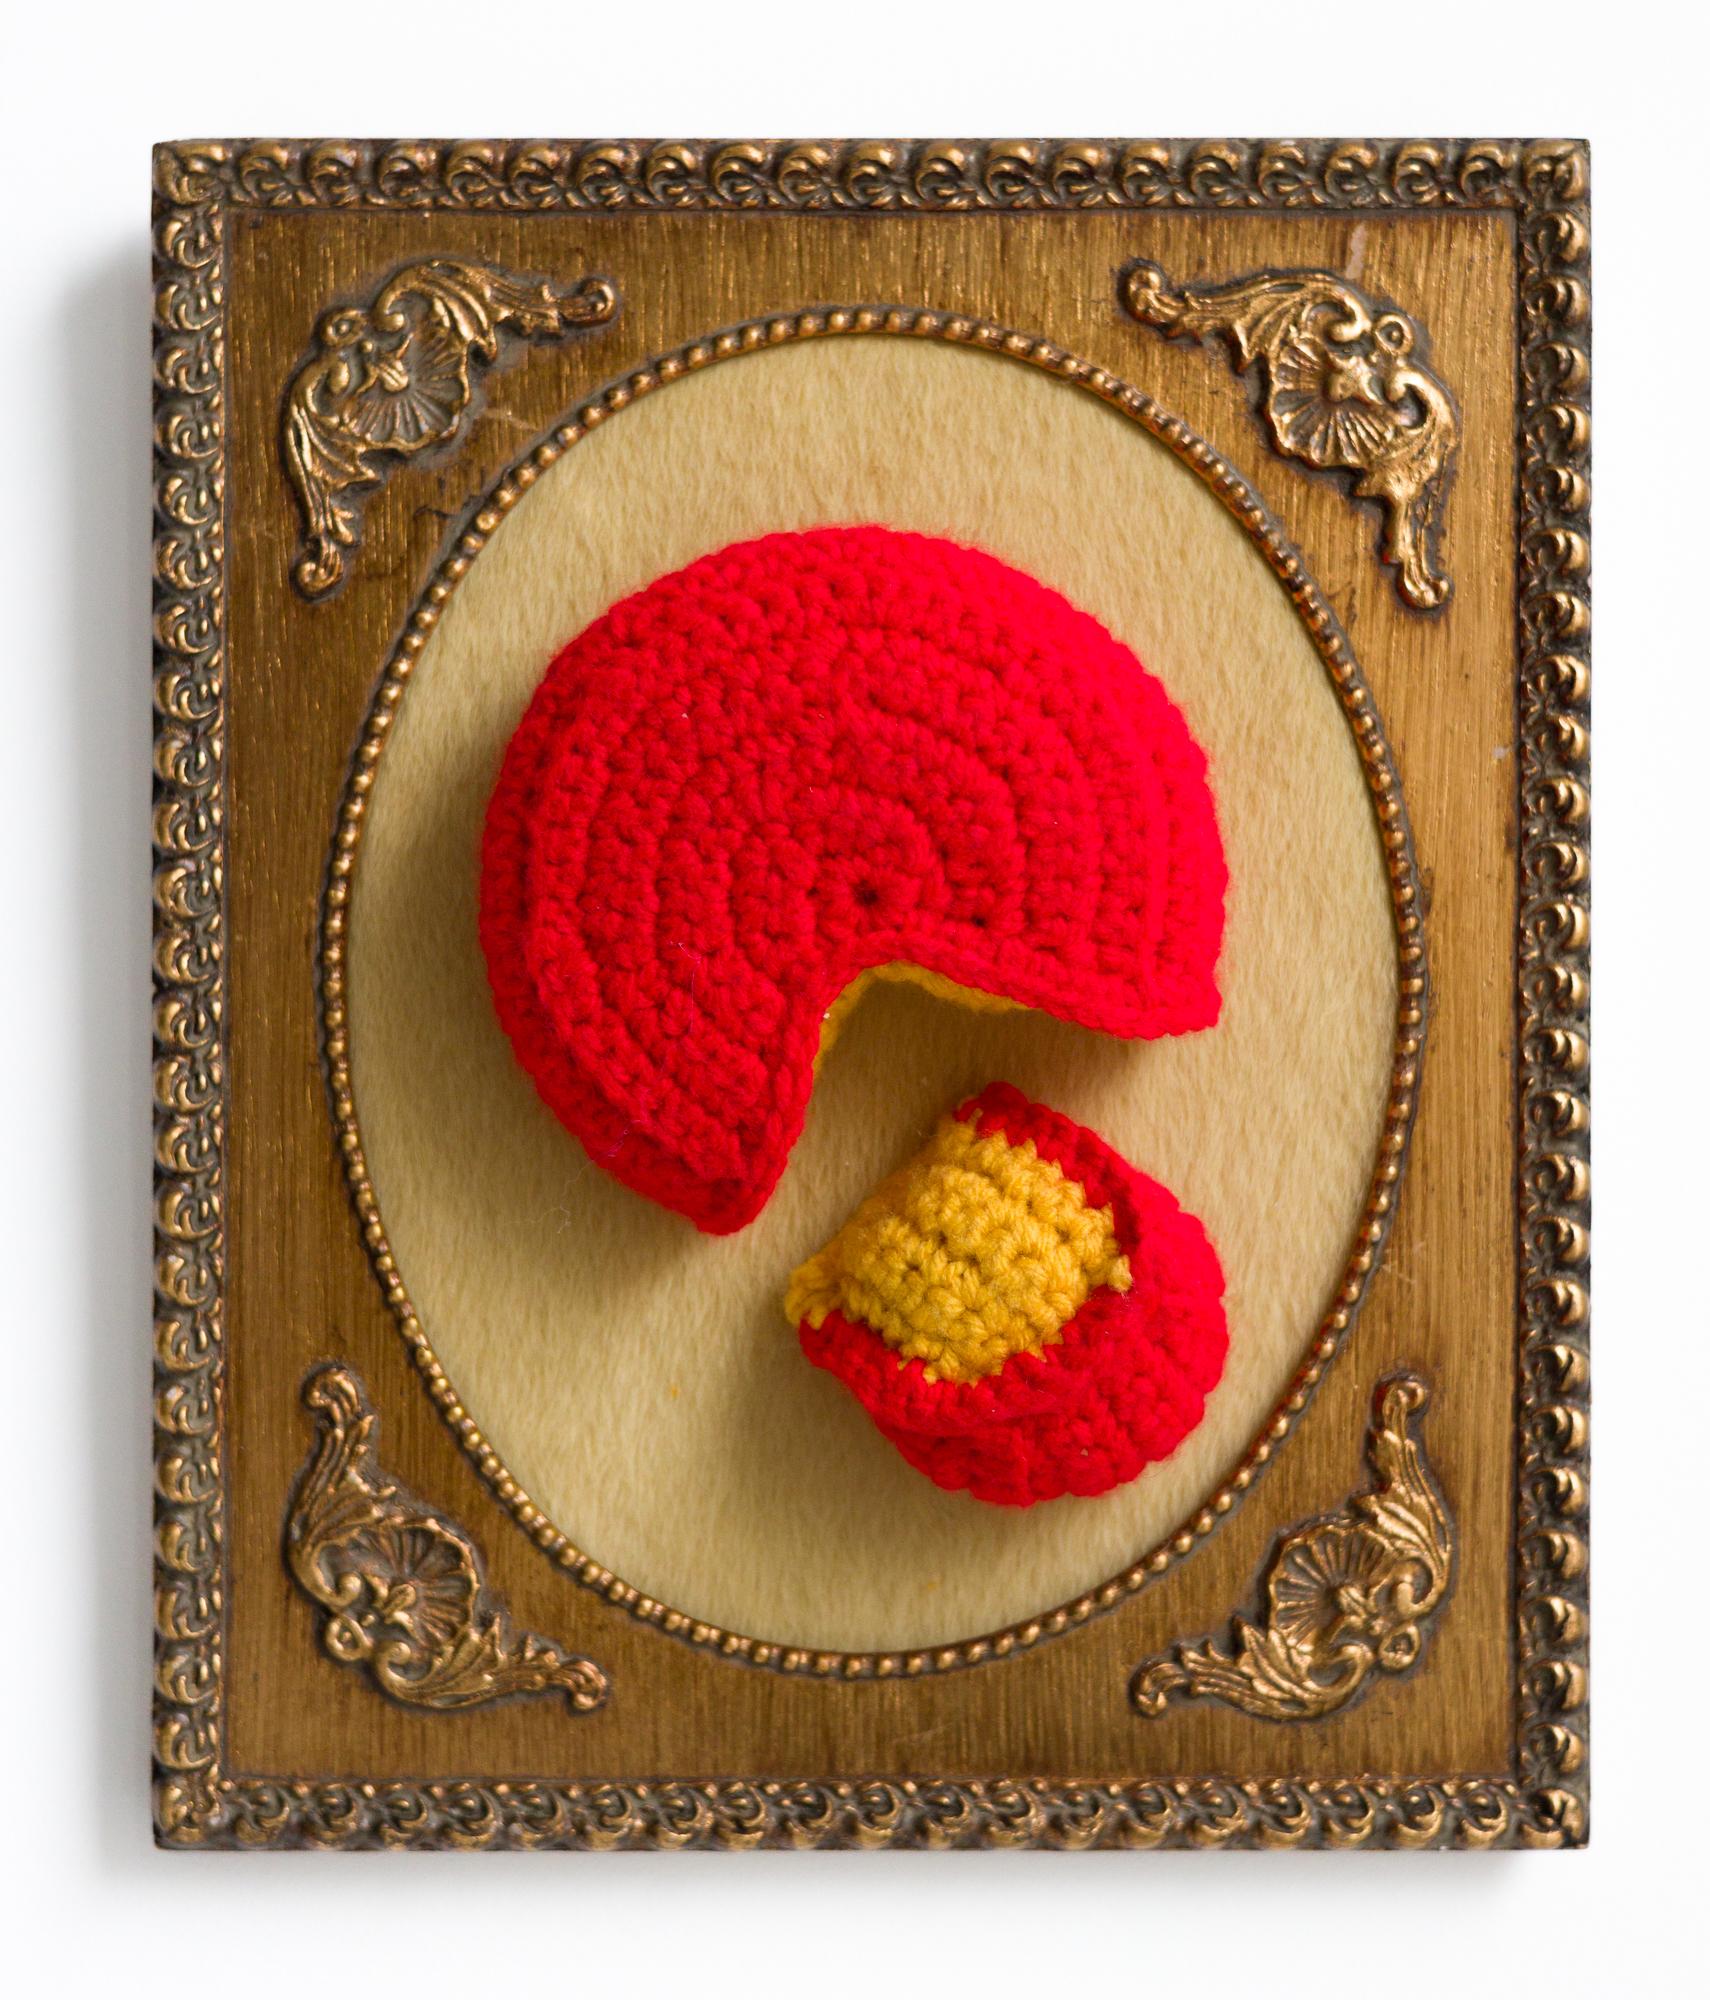 "Gouda Cheese", Food, Textiles, Crochet Acrylic in Vintage Frame